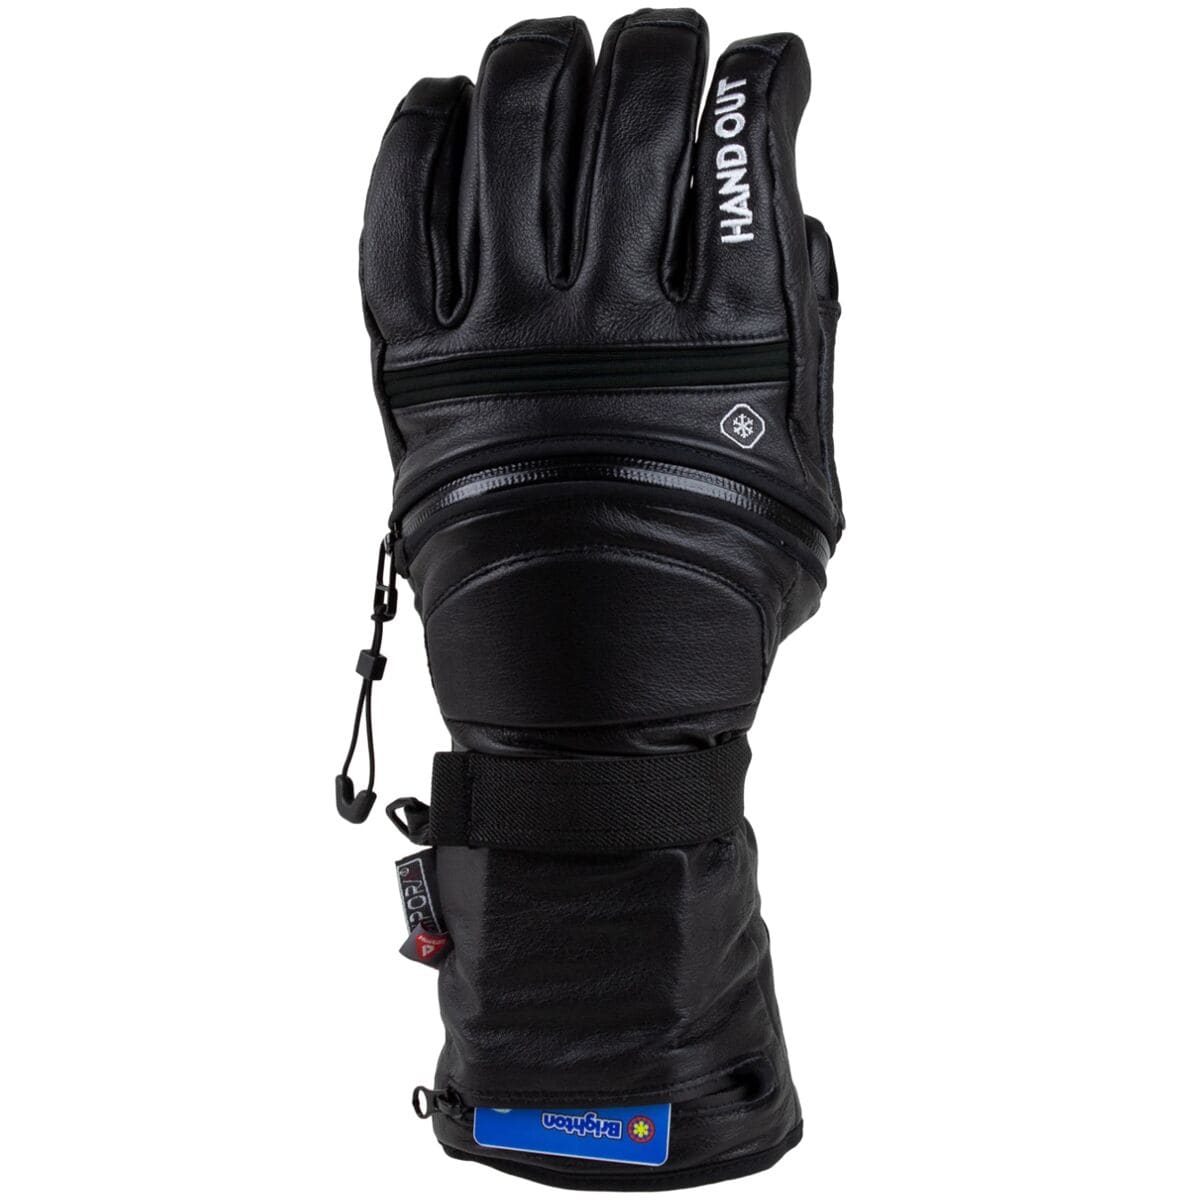 Hand Out Gloves Pro Ski Glove - Men's